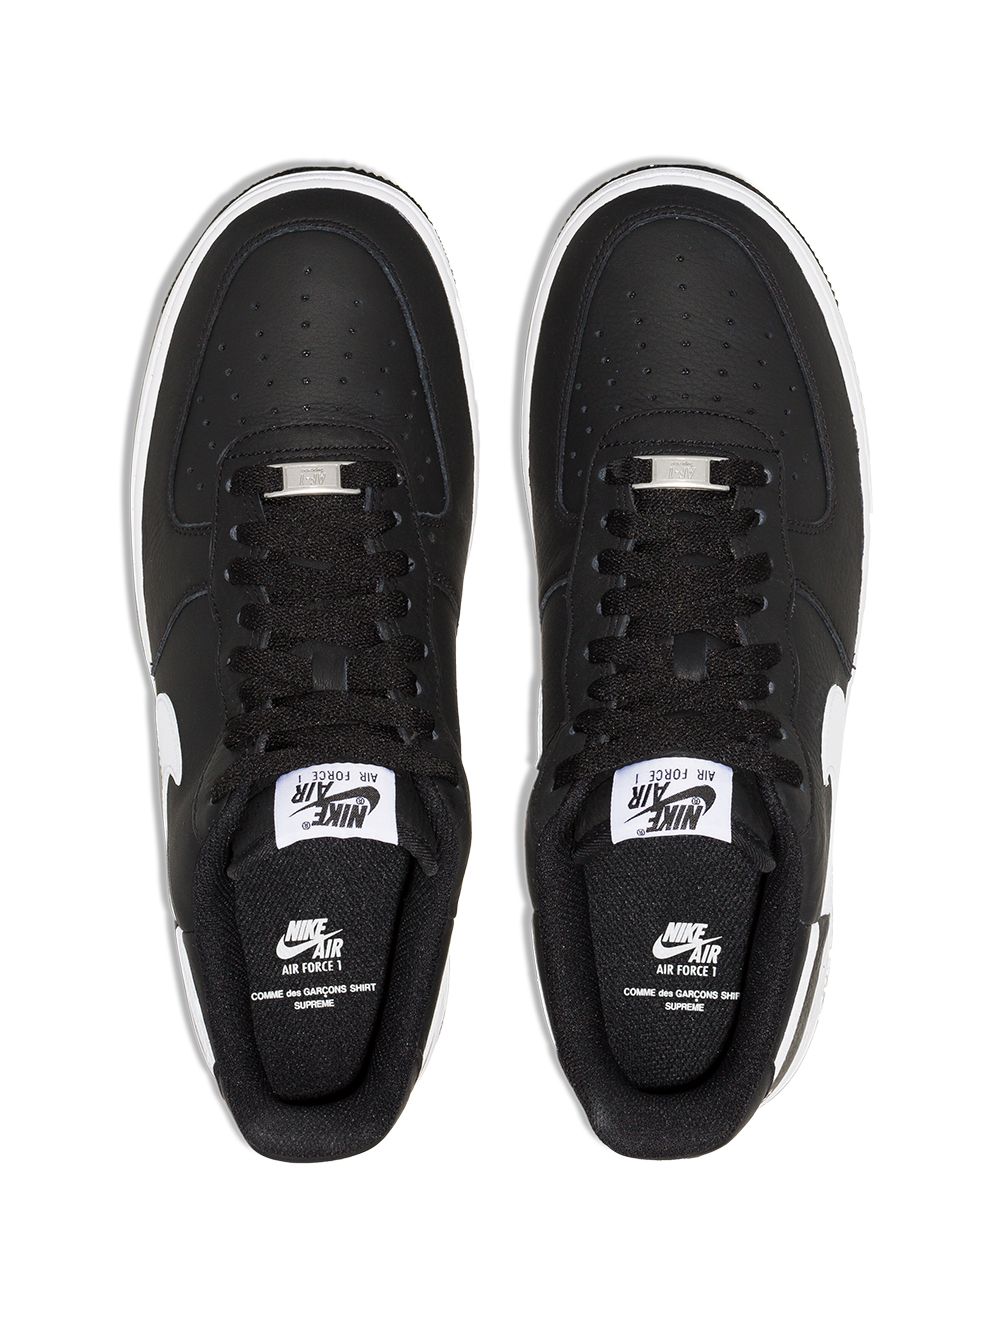 forskel Maori logo Nike x Comme Des Garçons x Supreme Air Force 1 Sneakers - Farfetch